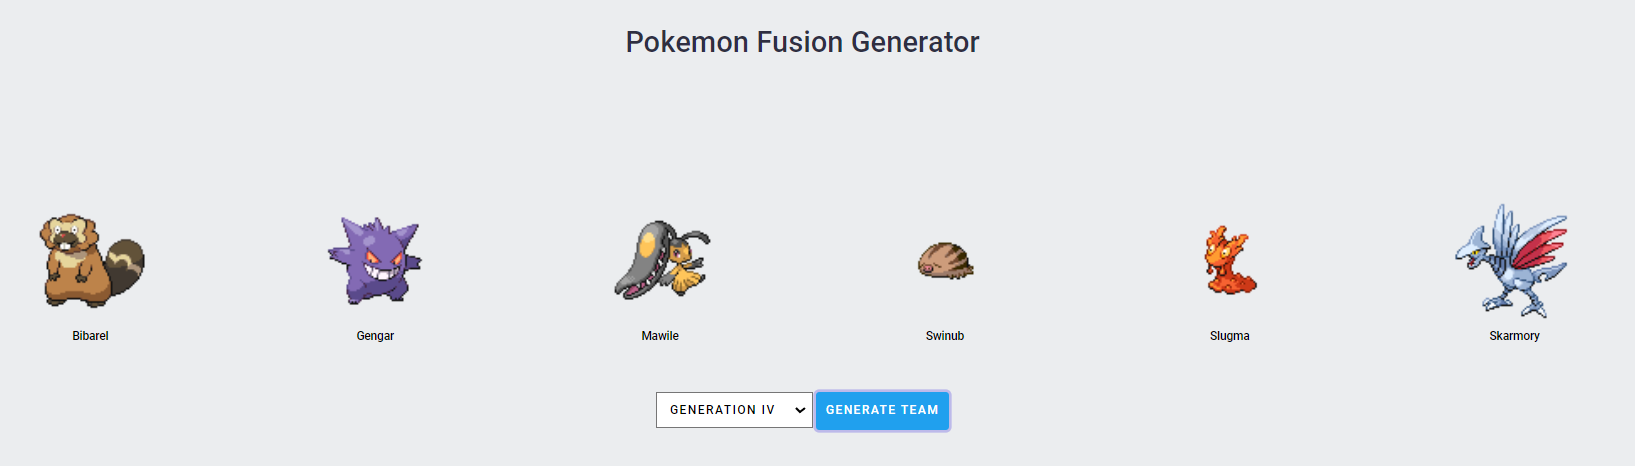 legendary pokemon fusion generator